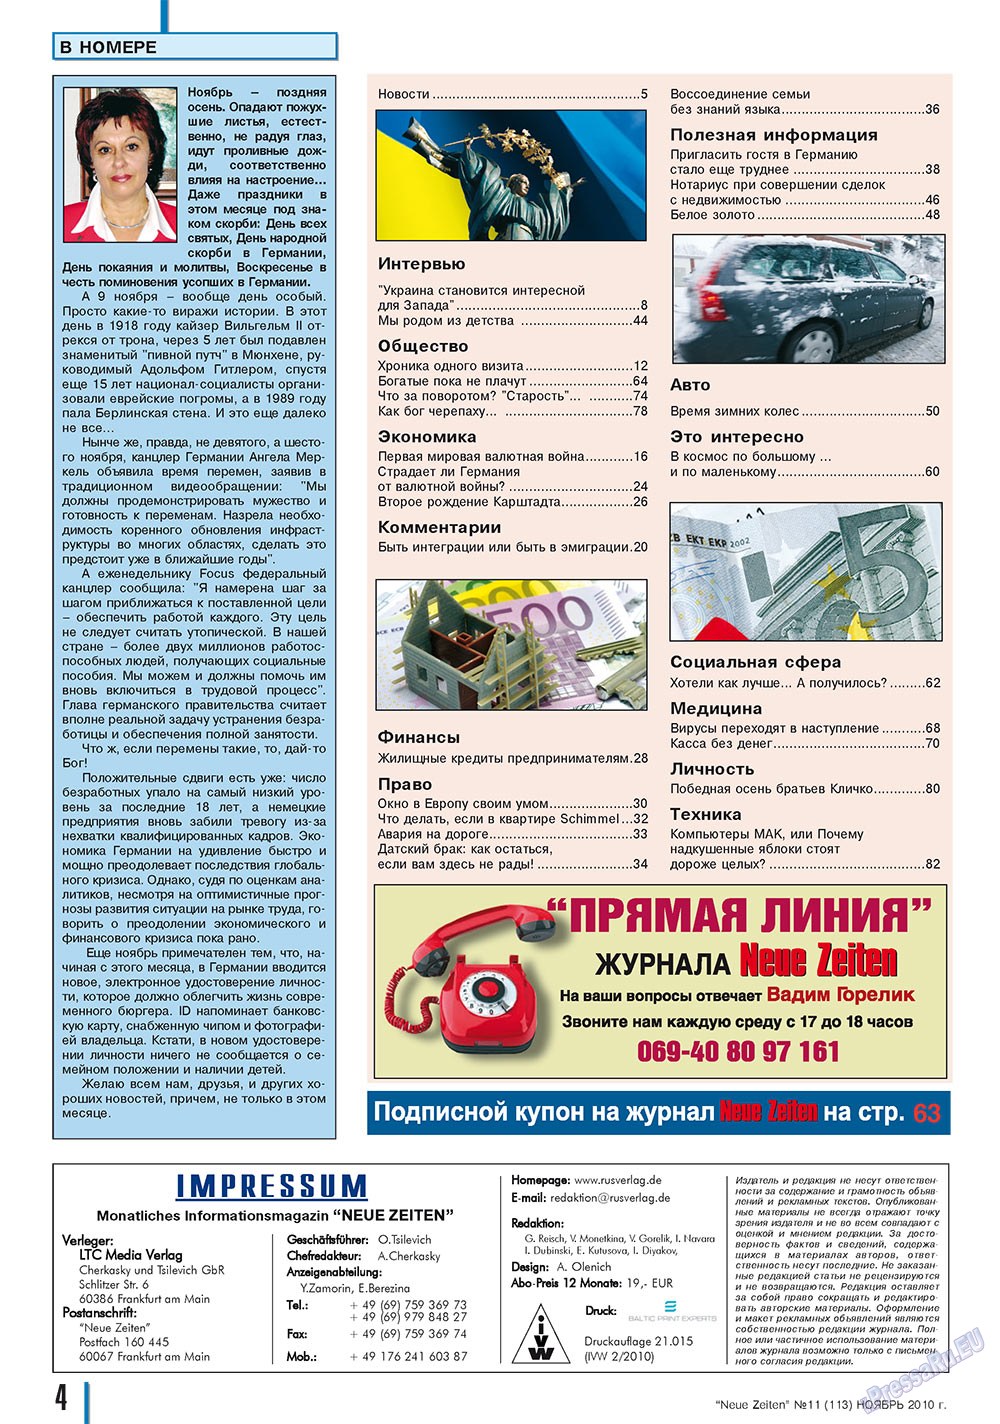 Neue Zeiten (журнал). 2010 год, номер 11, стр. 4